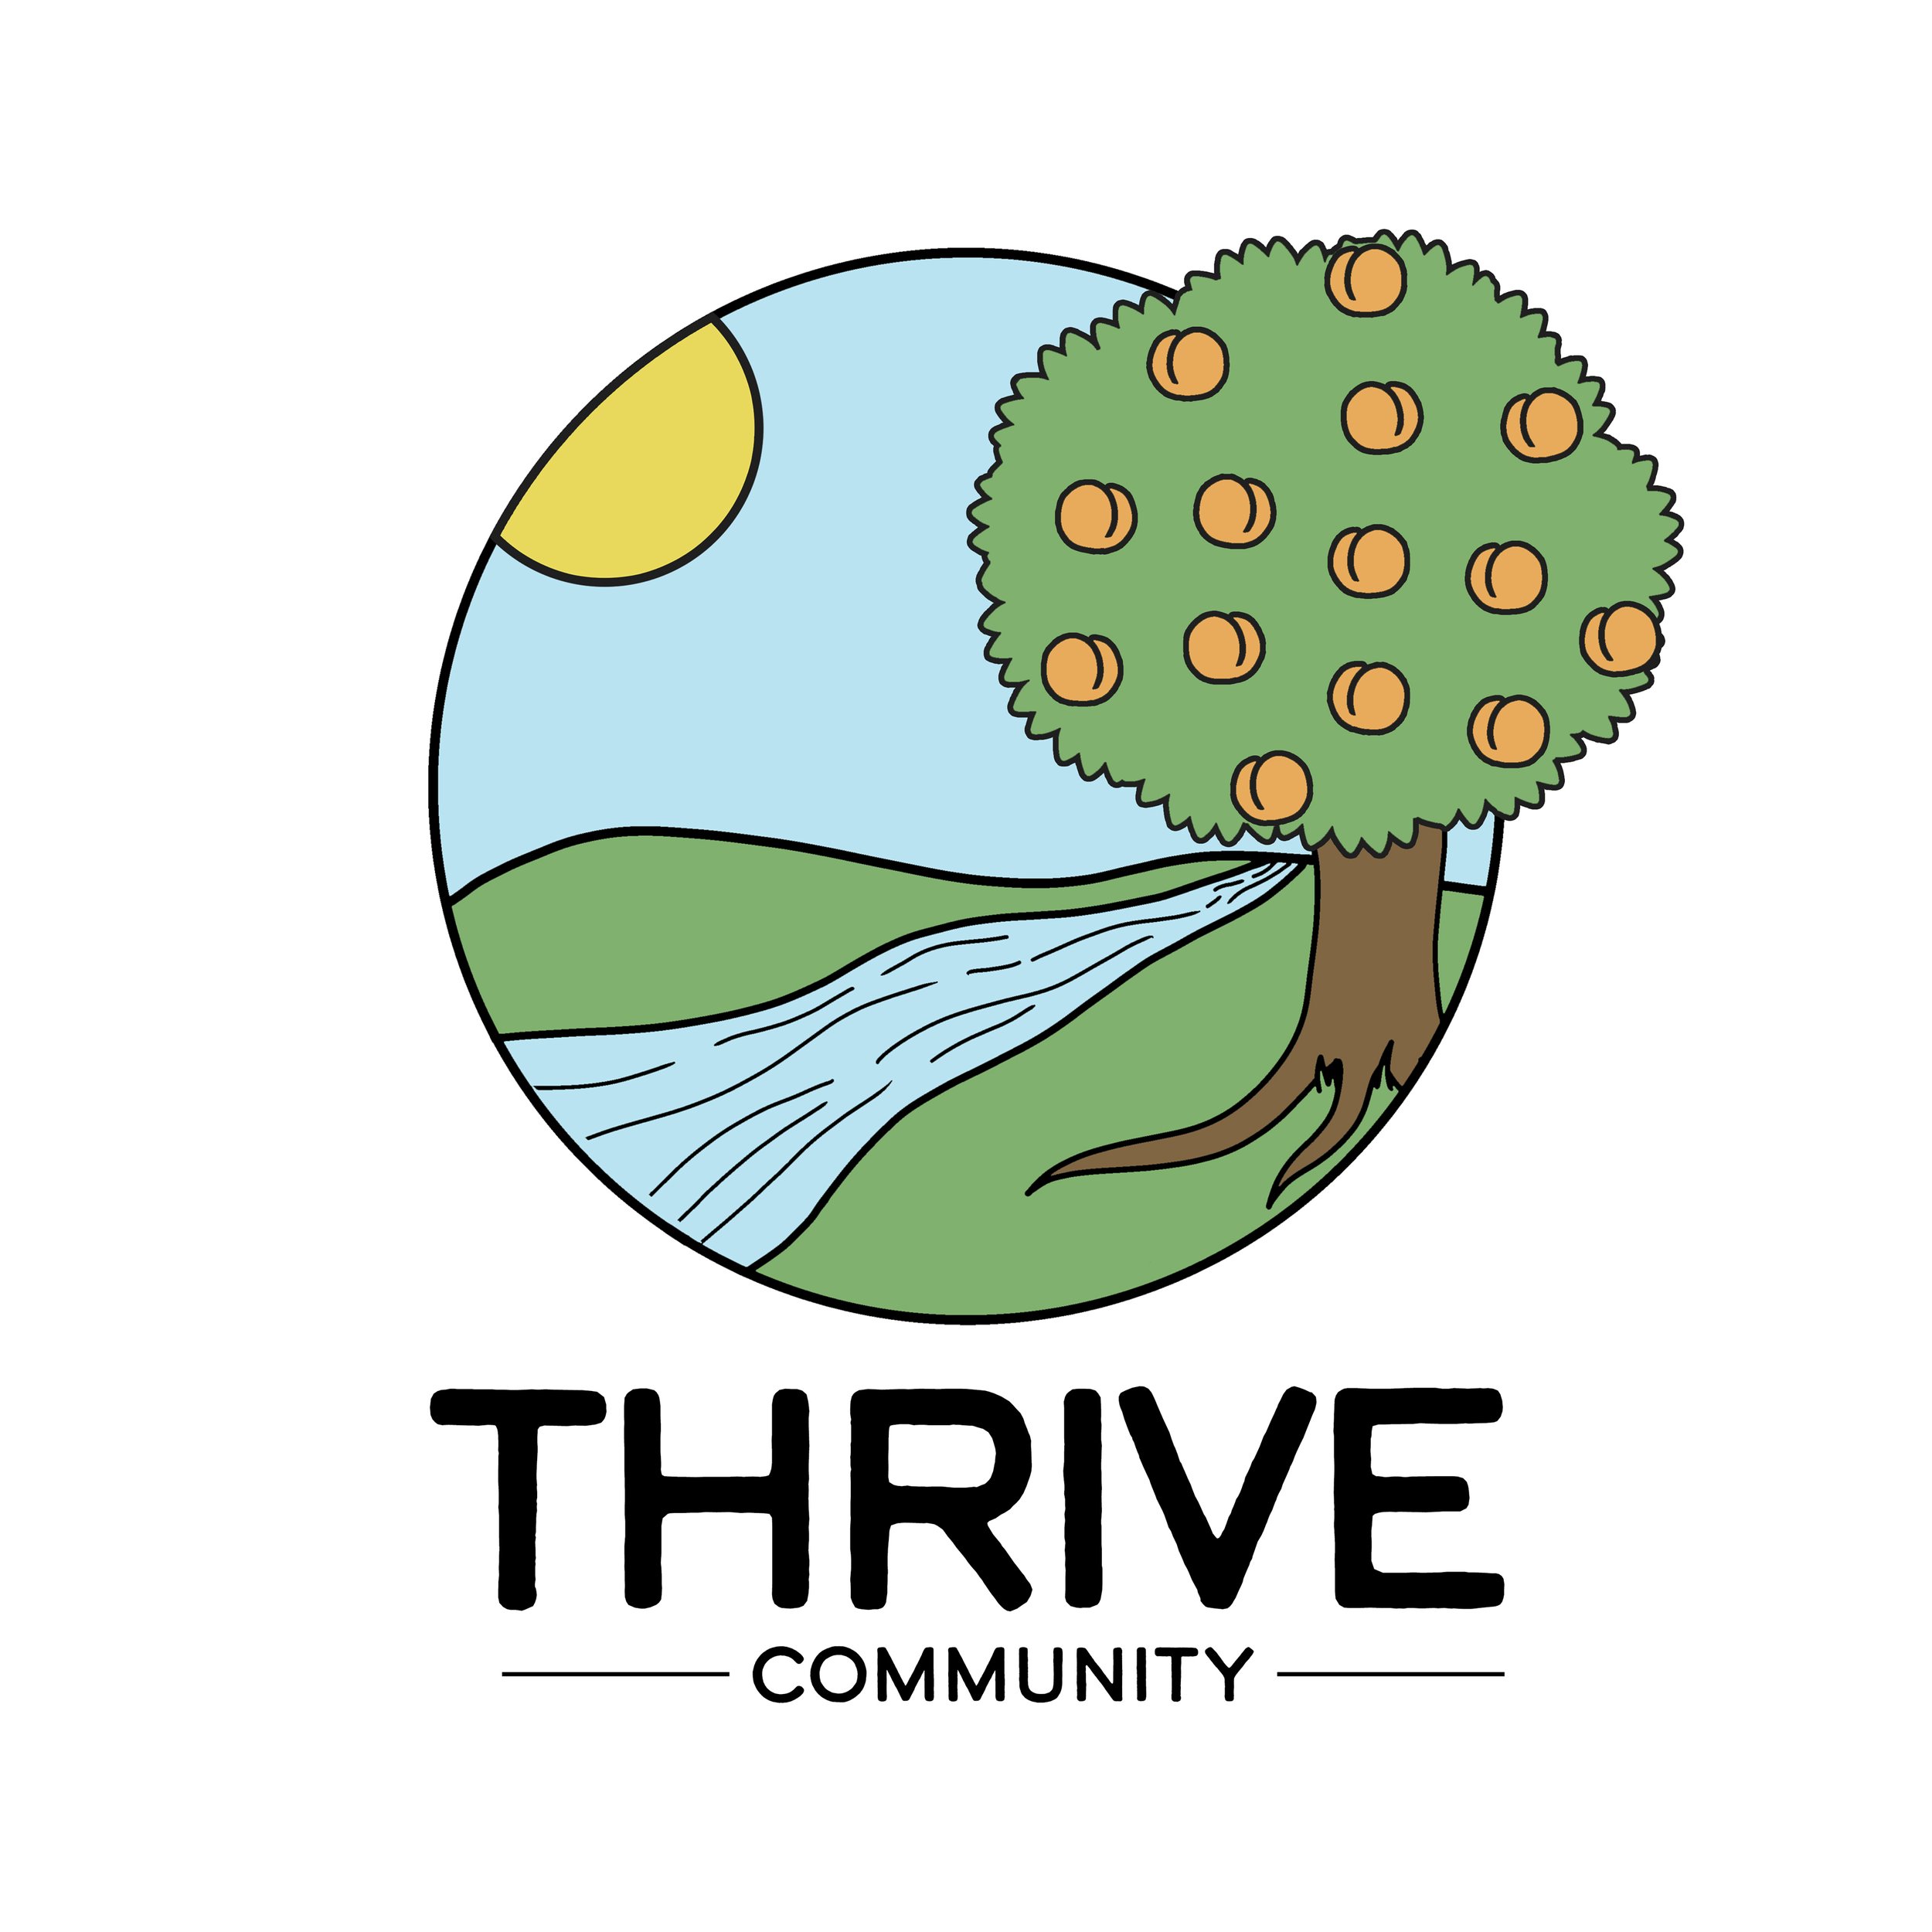 thrive community logo FINAL social.jpg